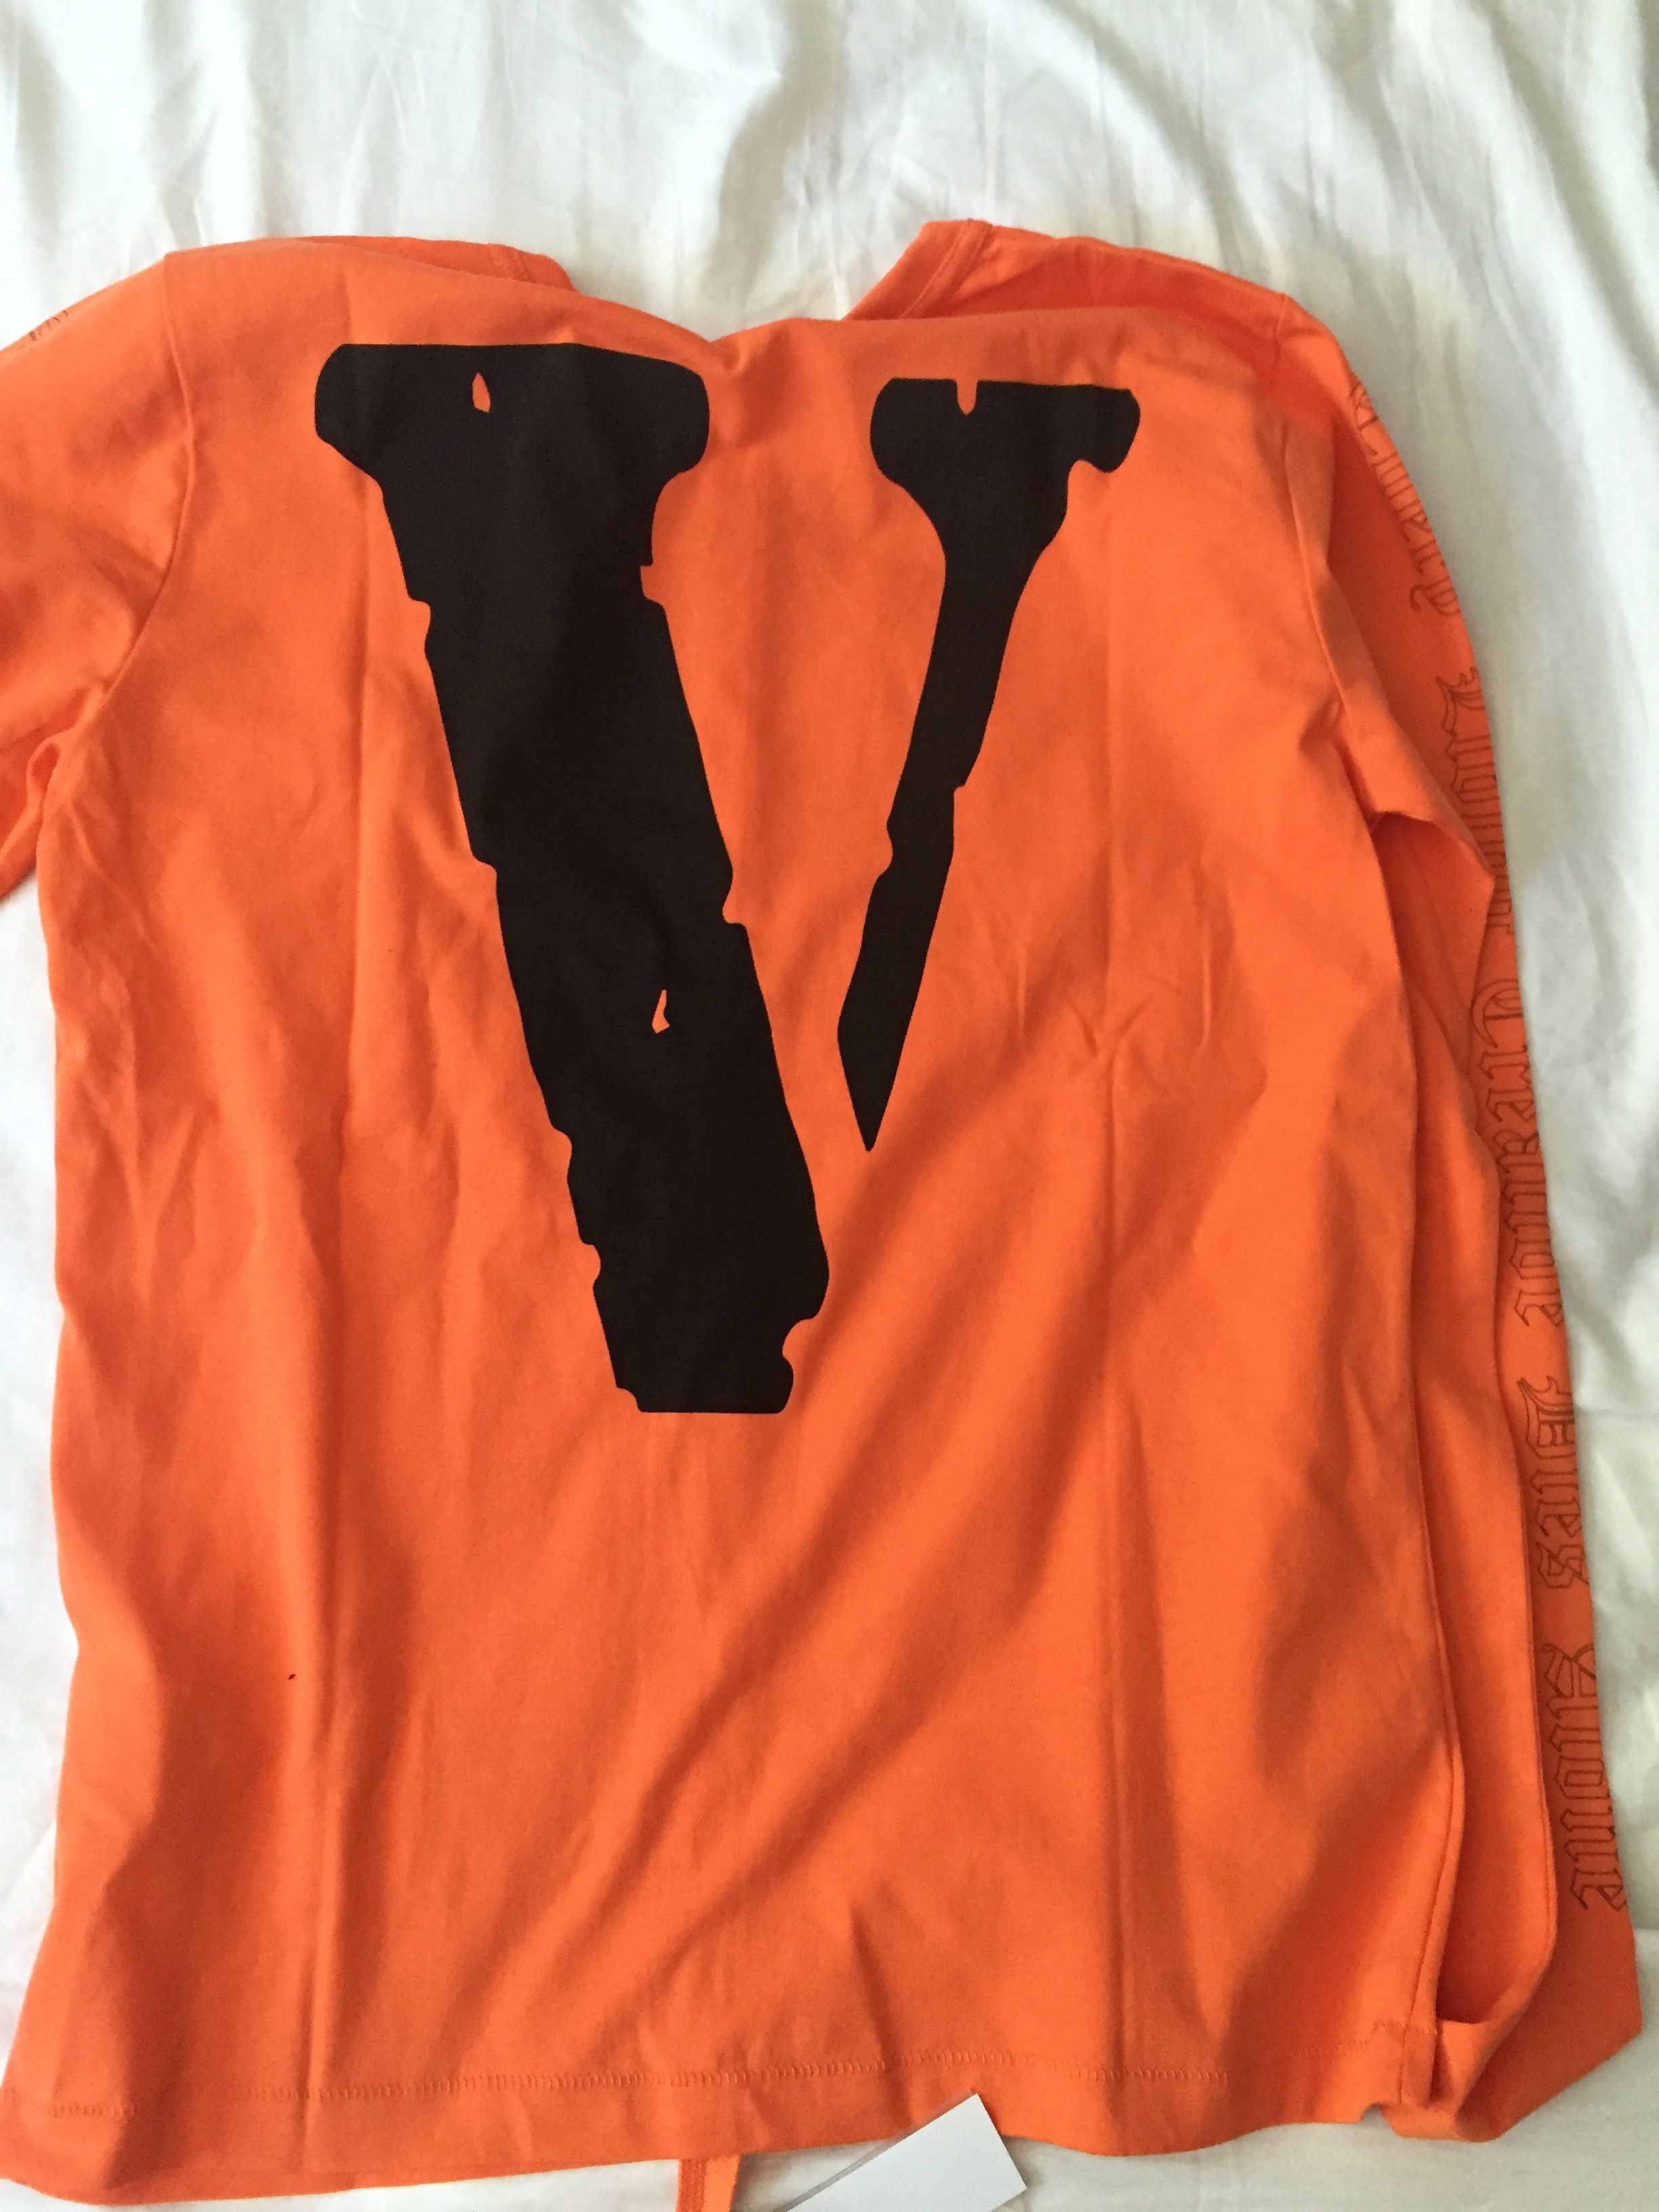 Vlone Vlone X off white long sleeve shirt Size US M / EU 48-50 / 2 - 2 Preview